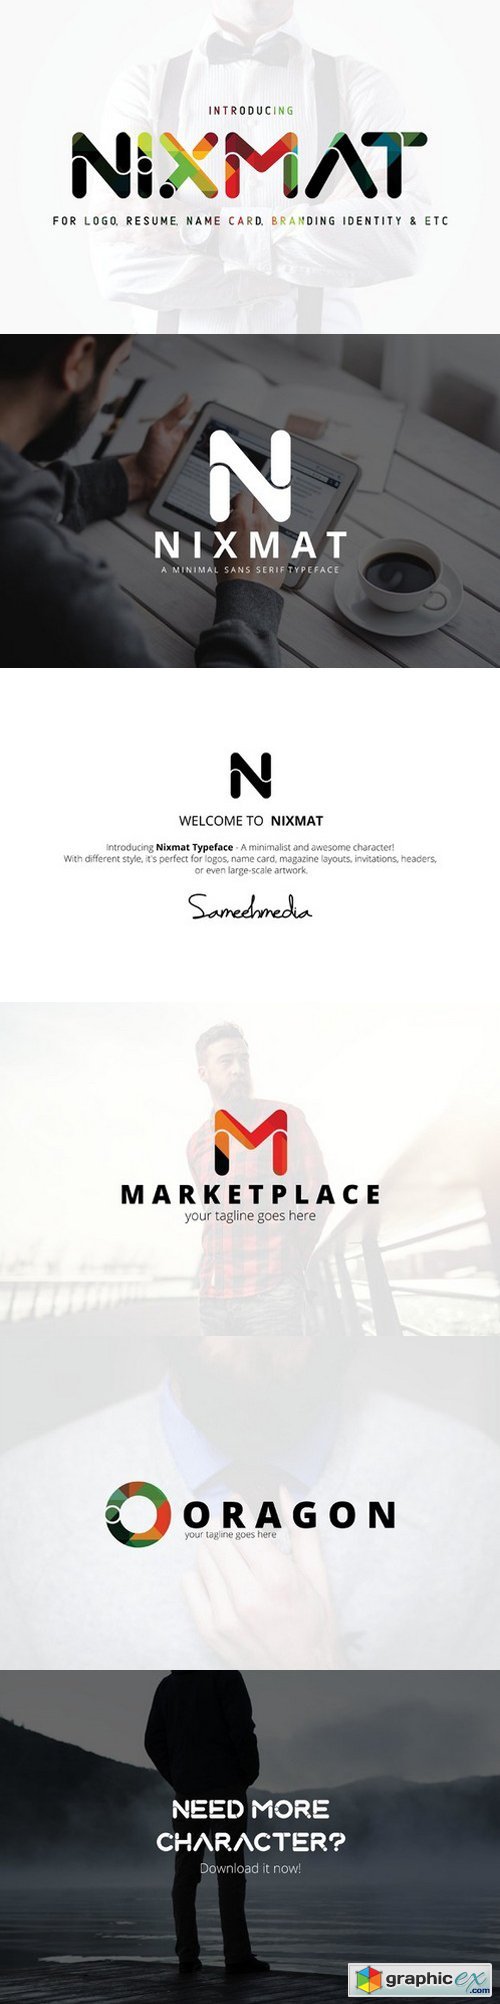 Nixmat | A Brand Identity Font